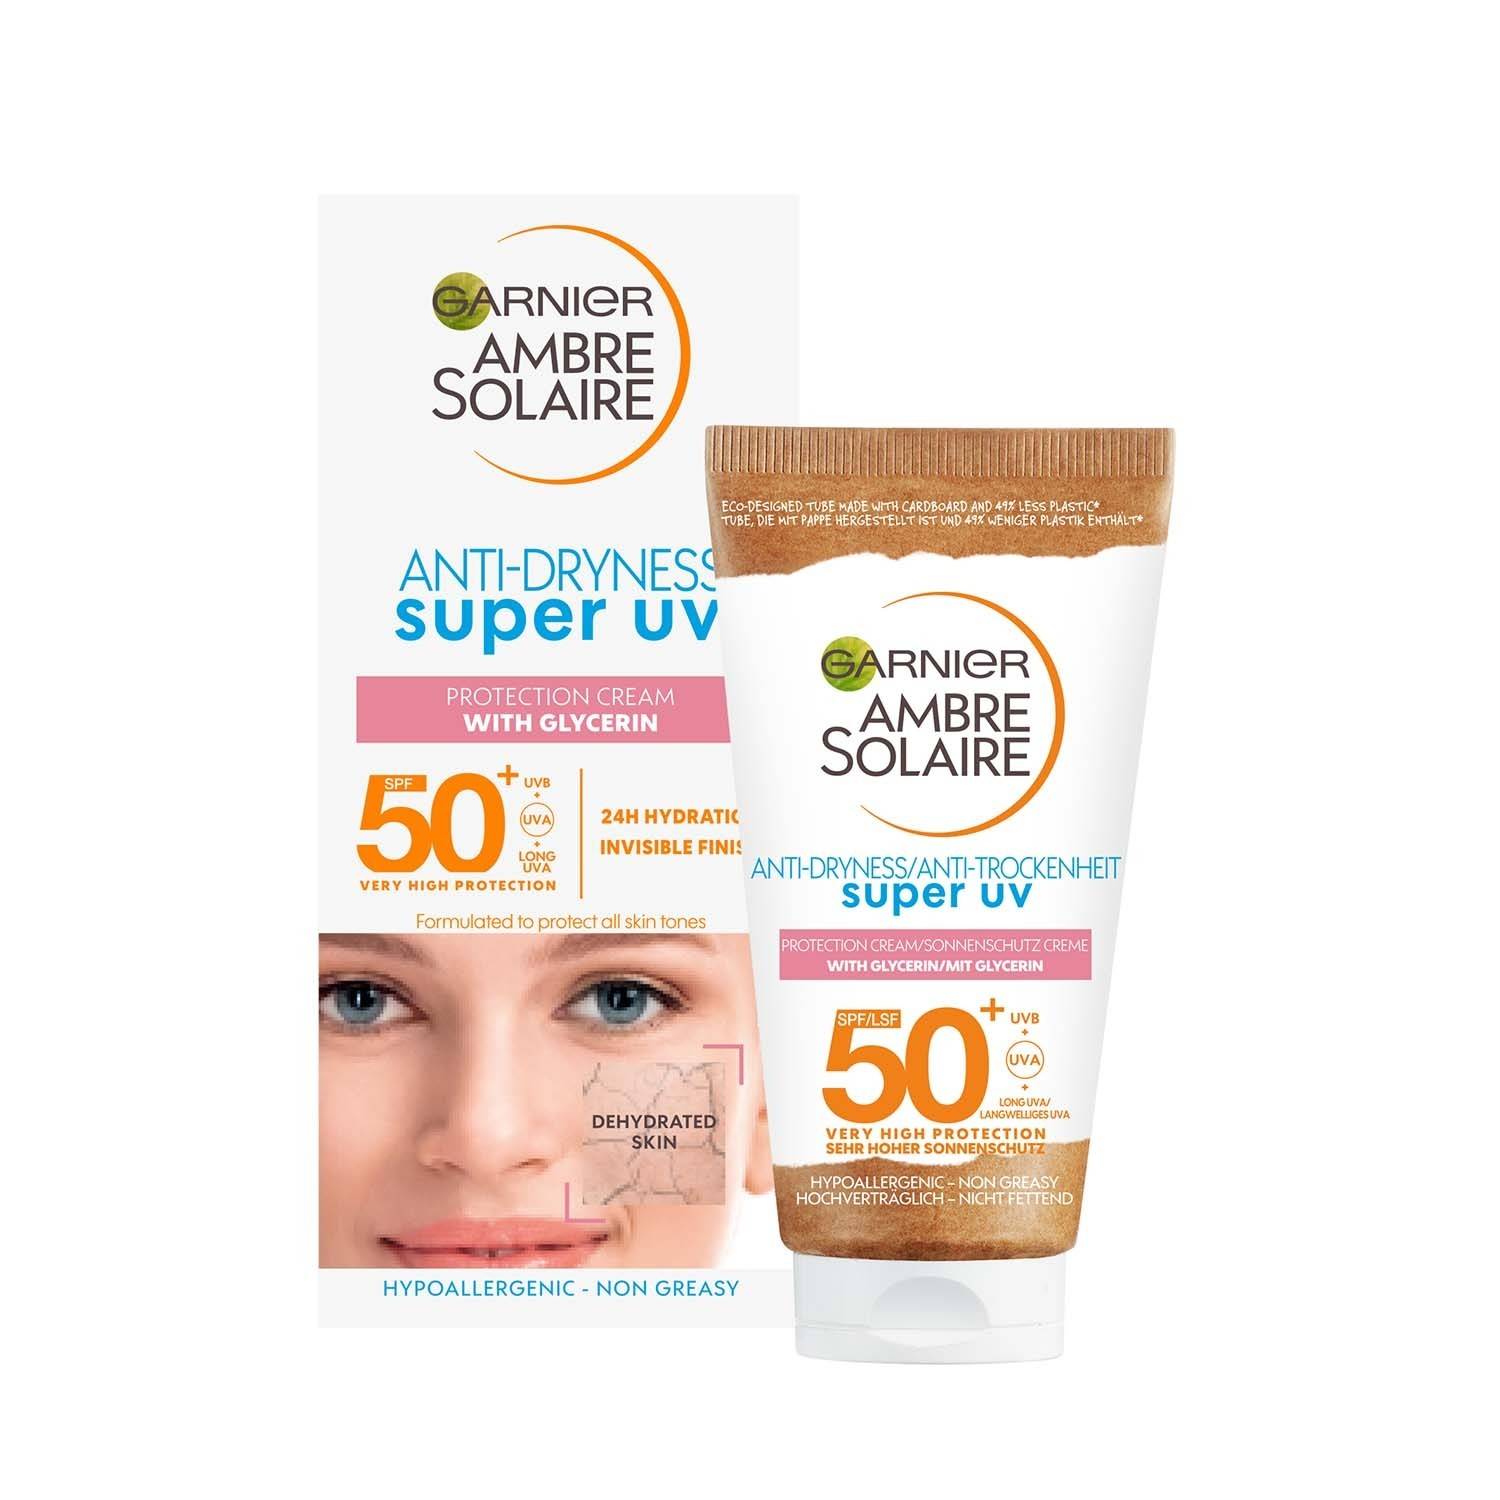 Garnier Ambre Solaire Sensitive Face and Neck Sun Cream SPF50+ 50ml